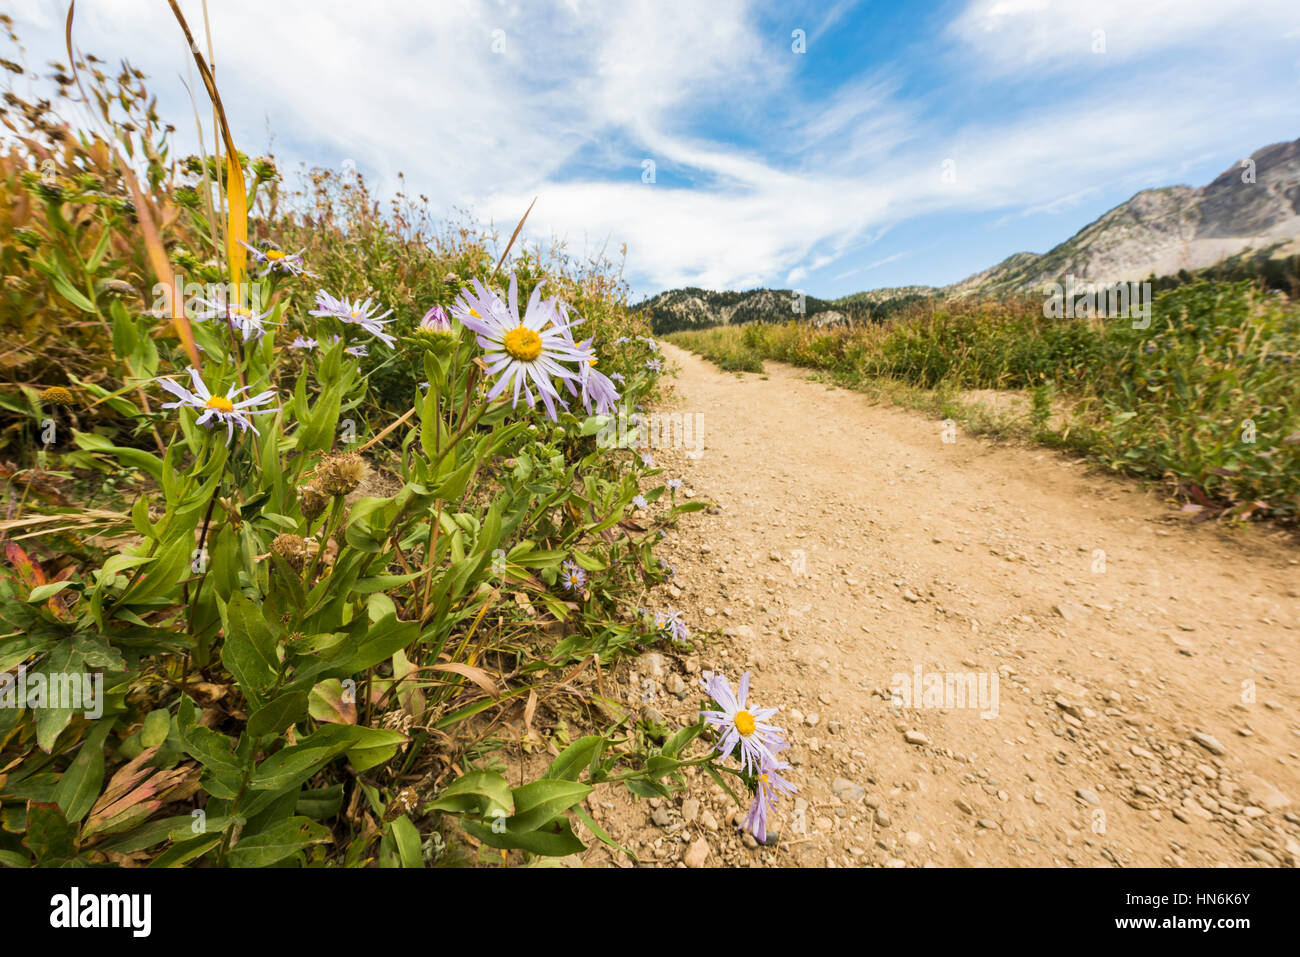 Showy Daisy/Fleabane wildflowers near a dirt road in alpine meadows in Albion Basin close to Salt Lake City Stock Photo